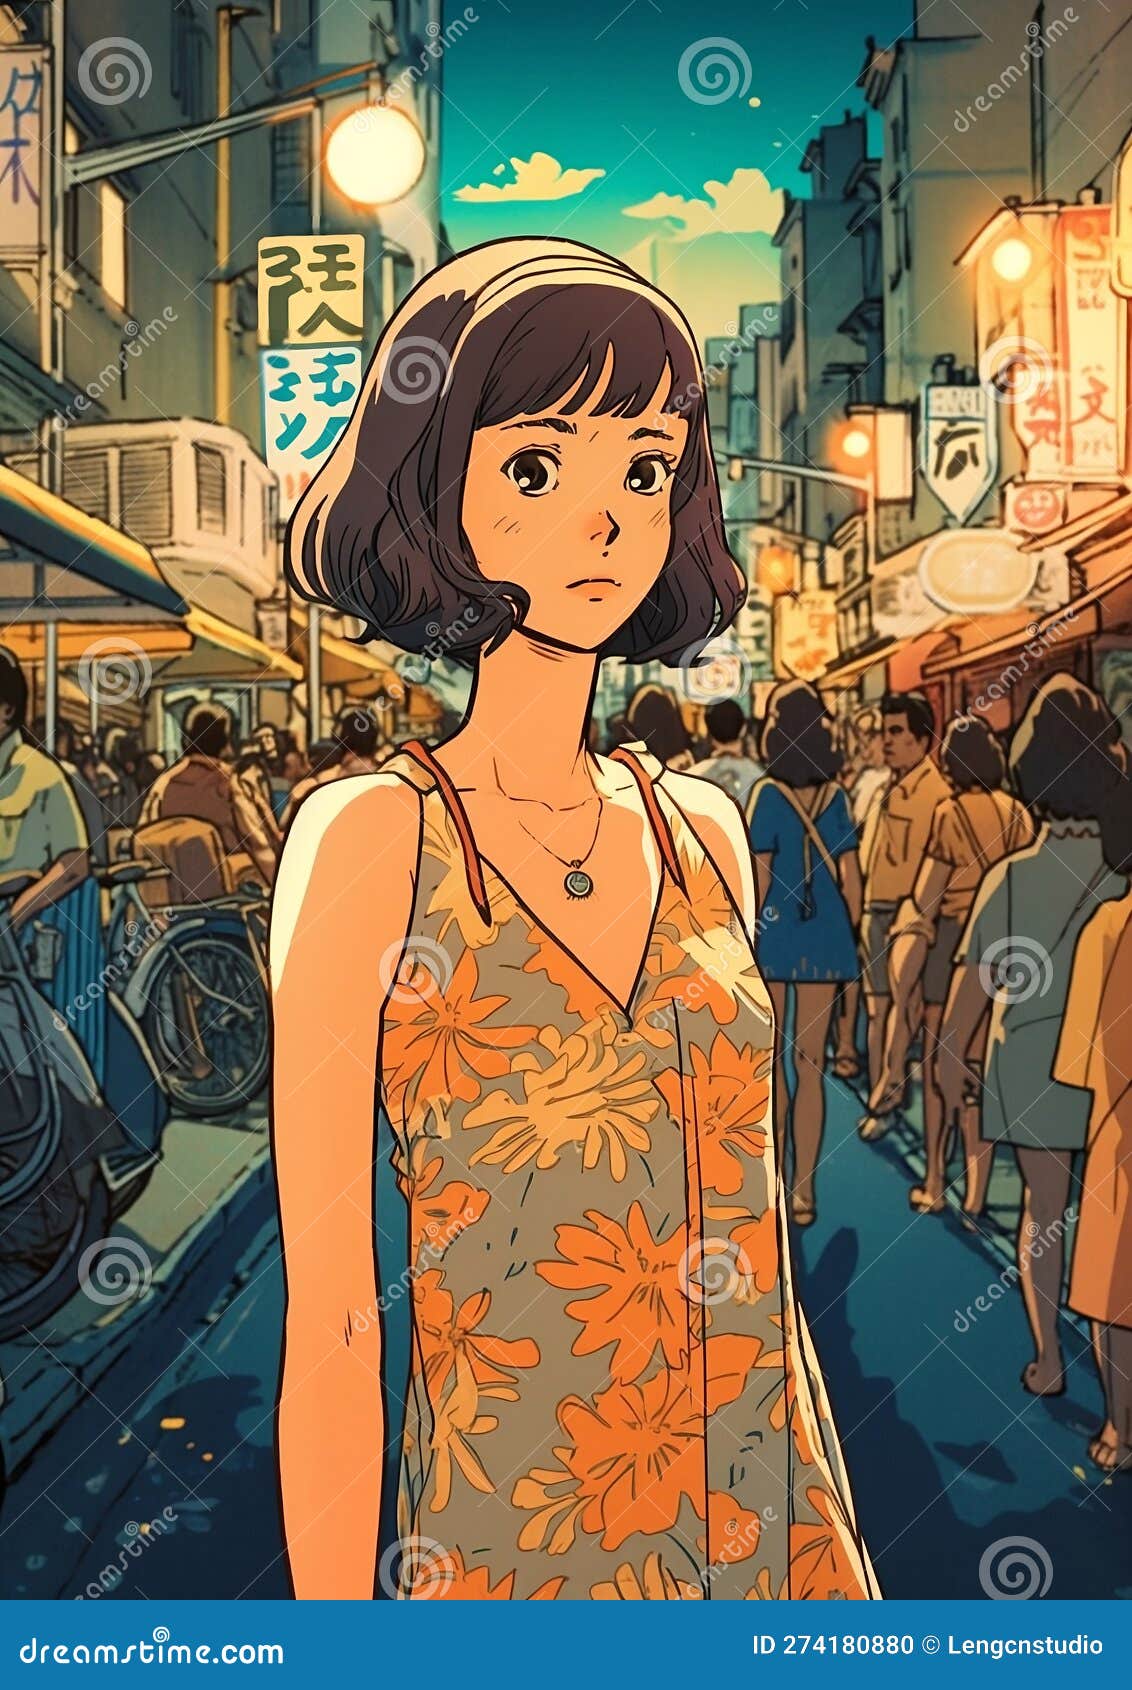 Wallpaper Bus Stations, Anime Girls, Urban, Night, Street - Wallpaperforu